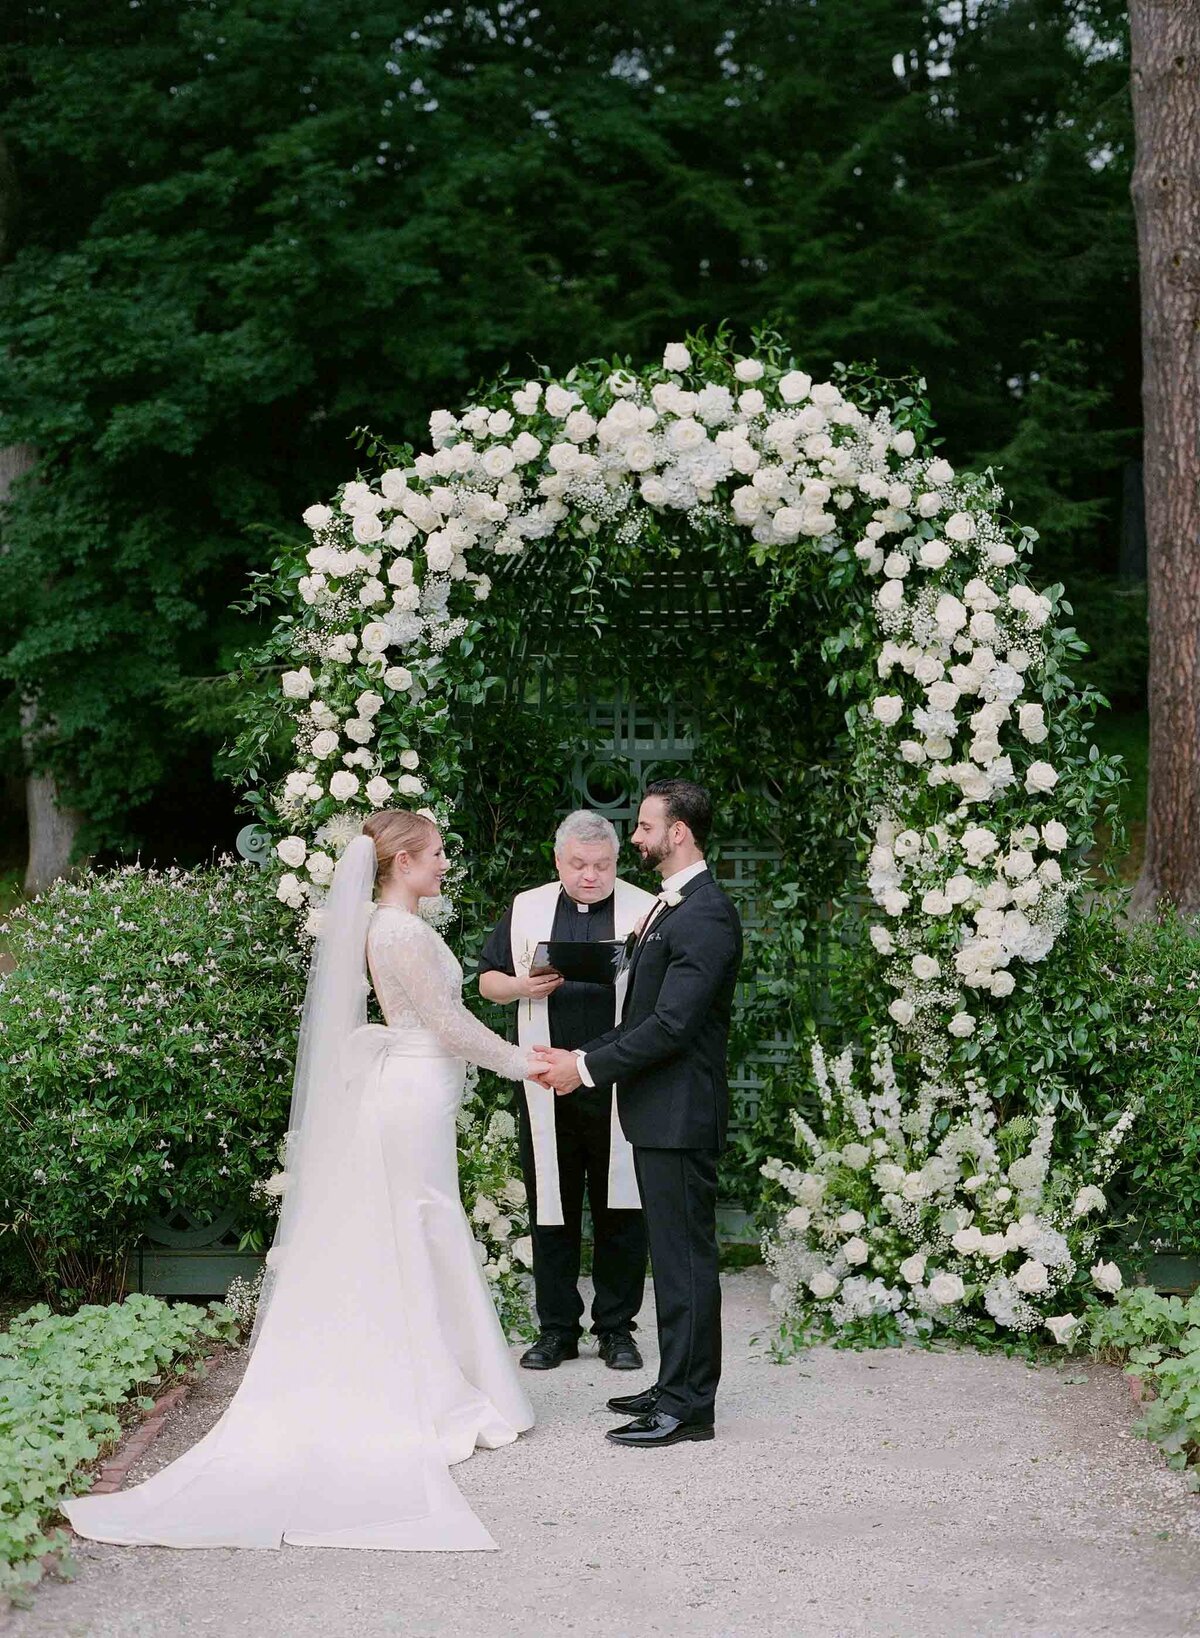 Molly-Carr-Photography-Lenox-Massachussets-Berkshires-Wedding-The-Mount-149